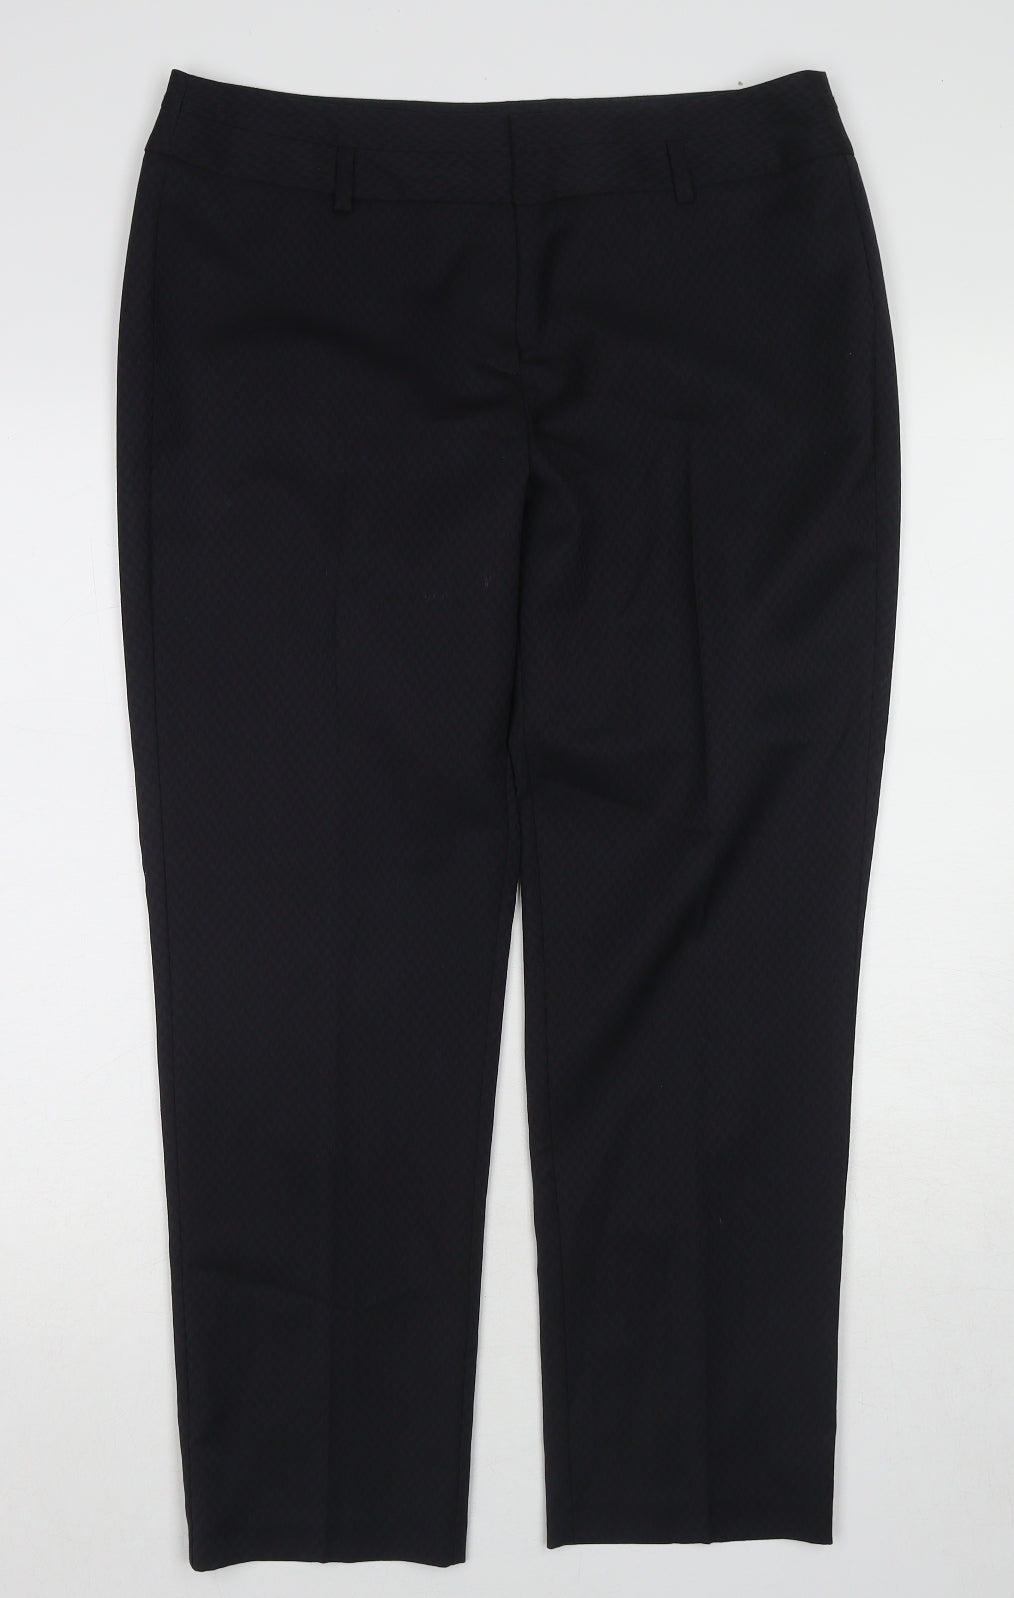 Debenhams Womens Black Polyester Chino Trousers Size 14 L27 in Regular Zip